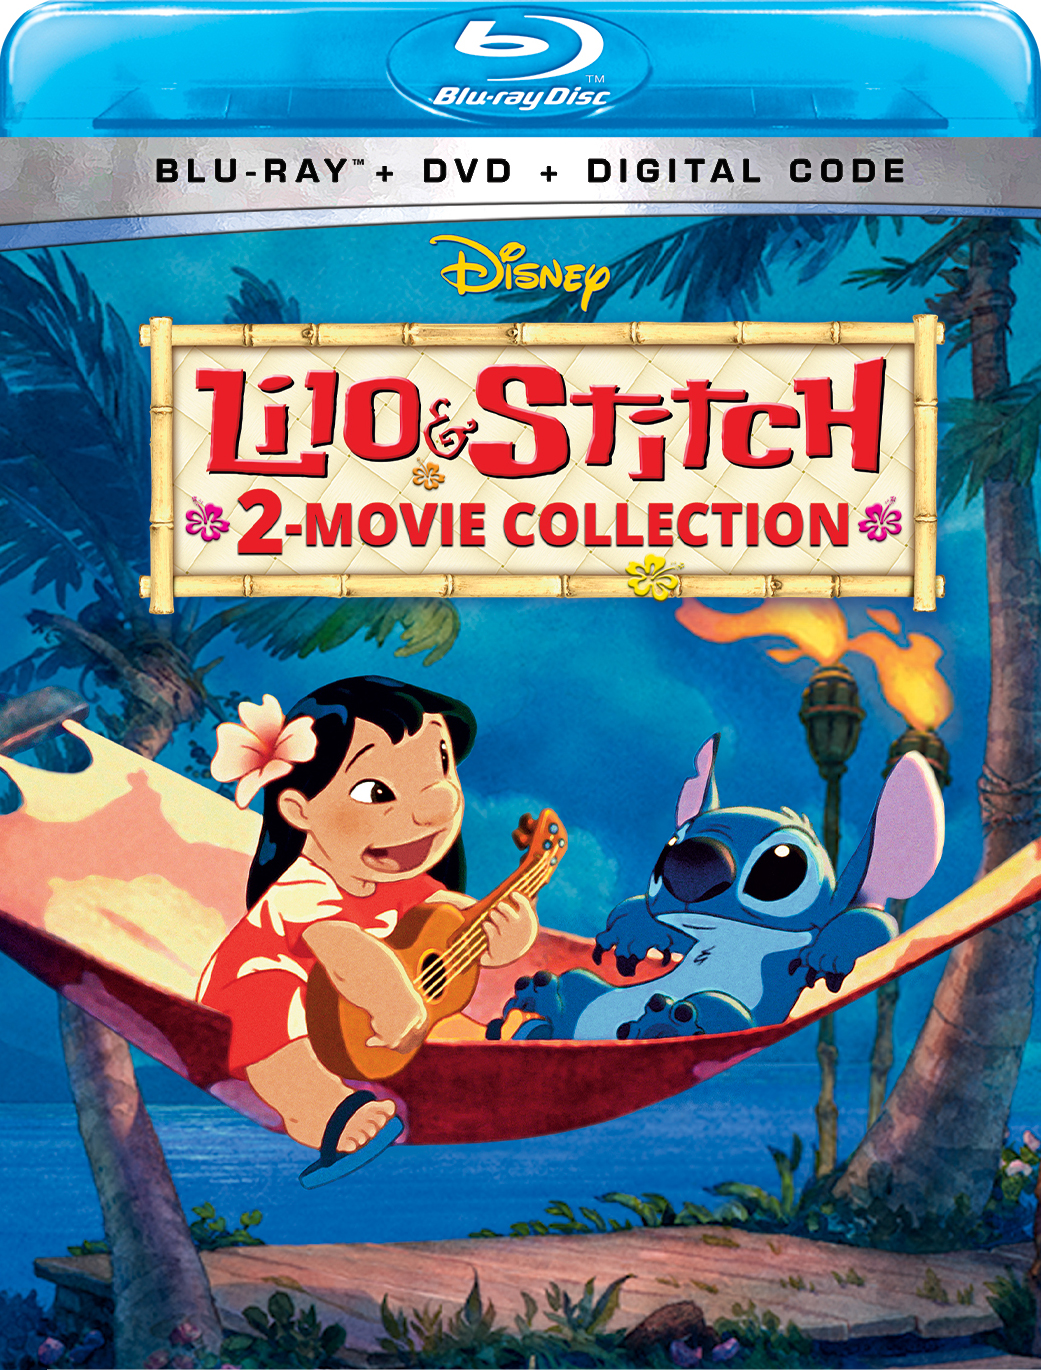 32 Lilo & Stitch Products